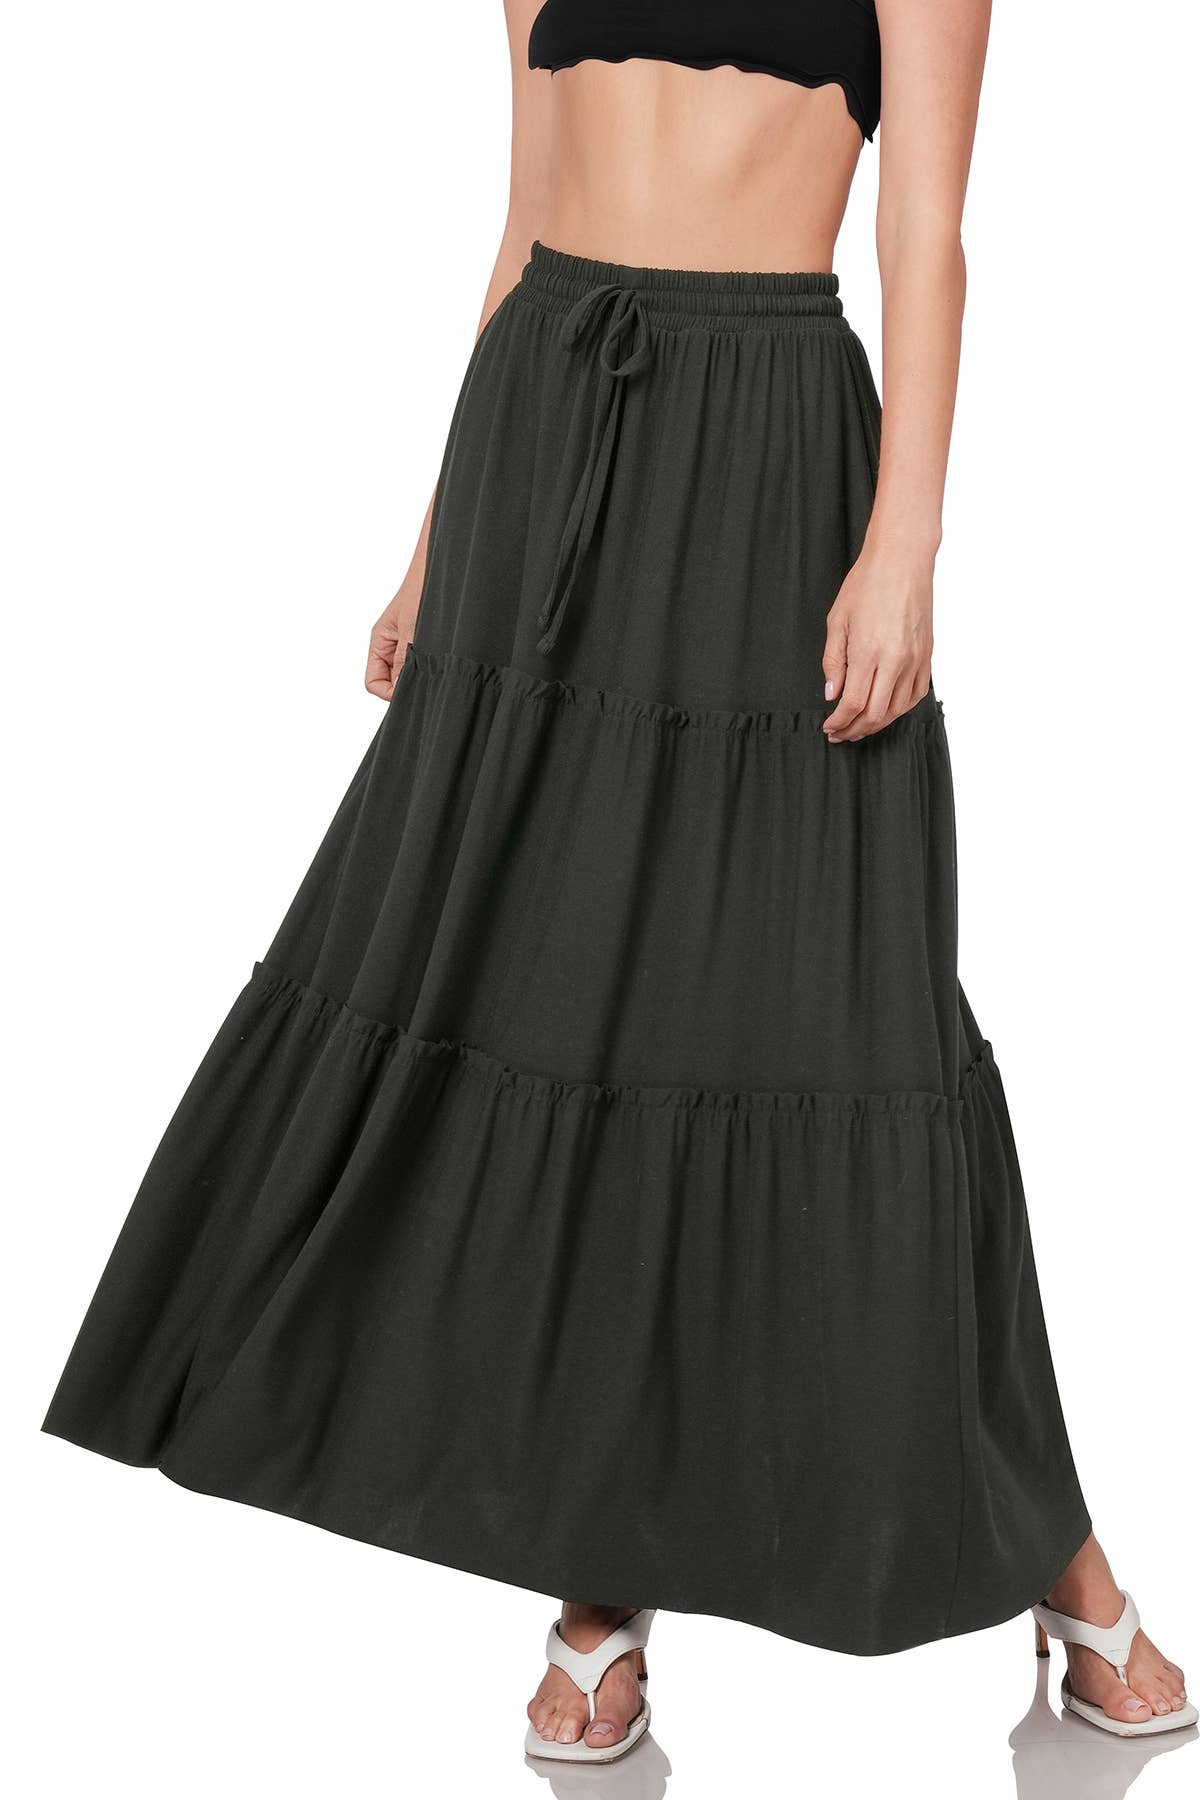 Drawstring Waist Ruffle Skirt in Black